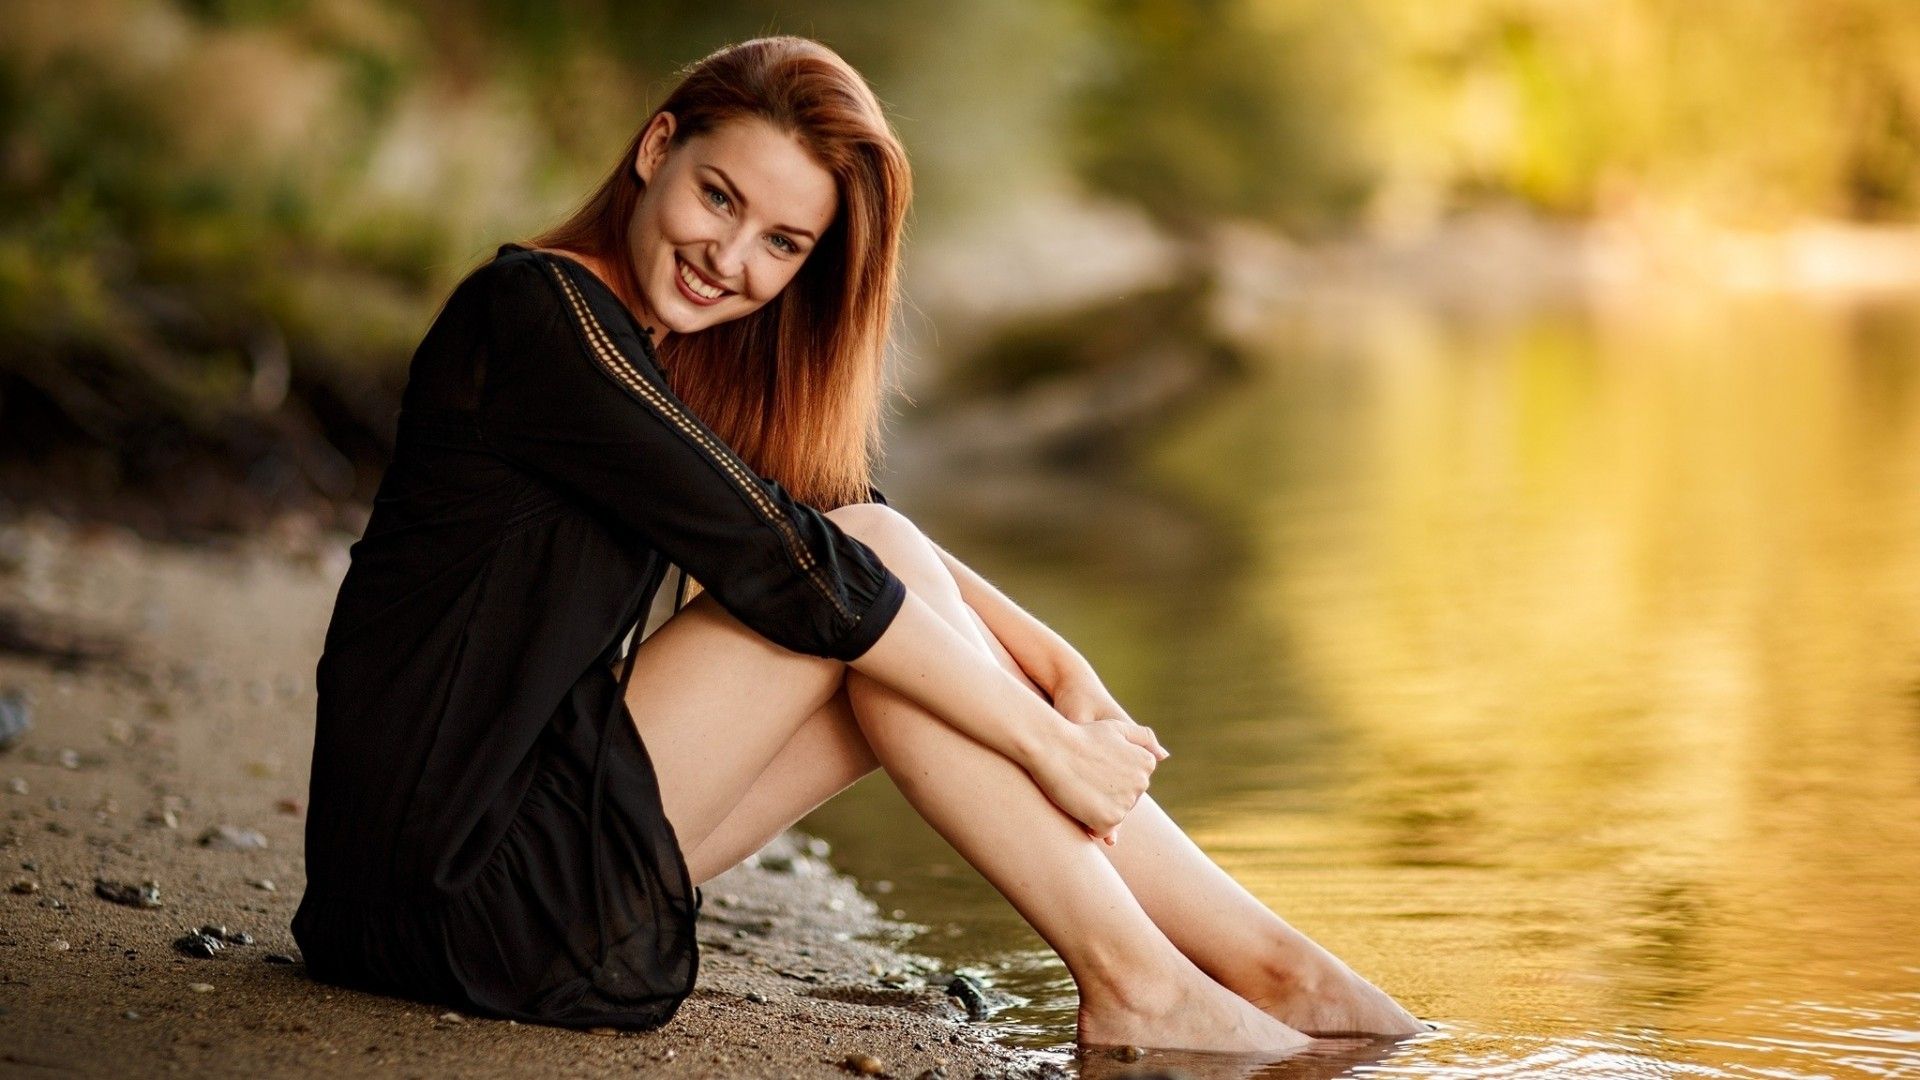 Download 1920x1080 Redhead, Smiling, Sitting, Water, Model, Women, Long Hair, Legs Wallpaper for Widescreen